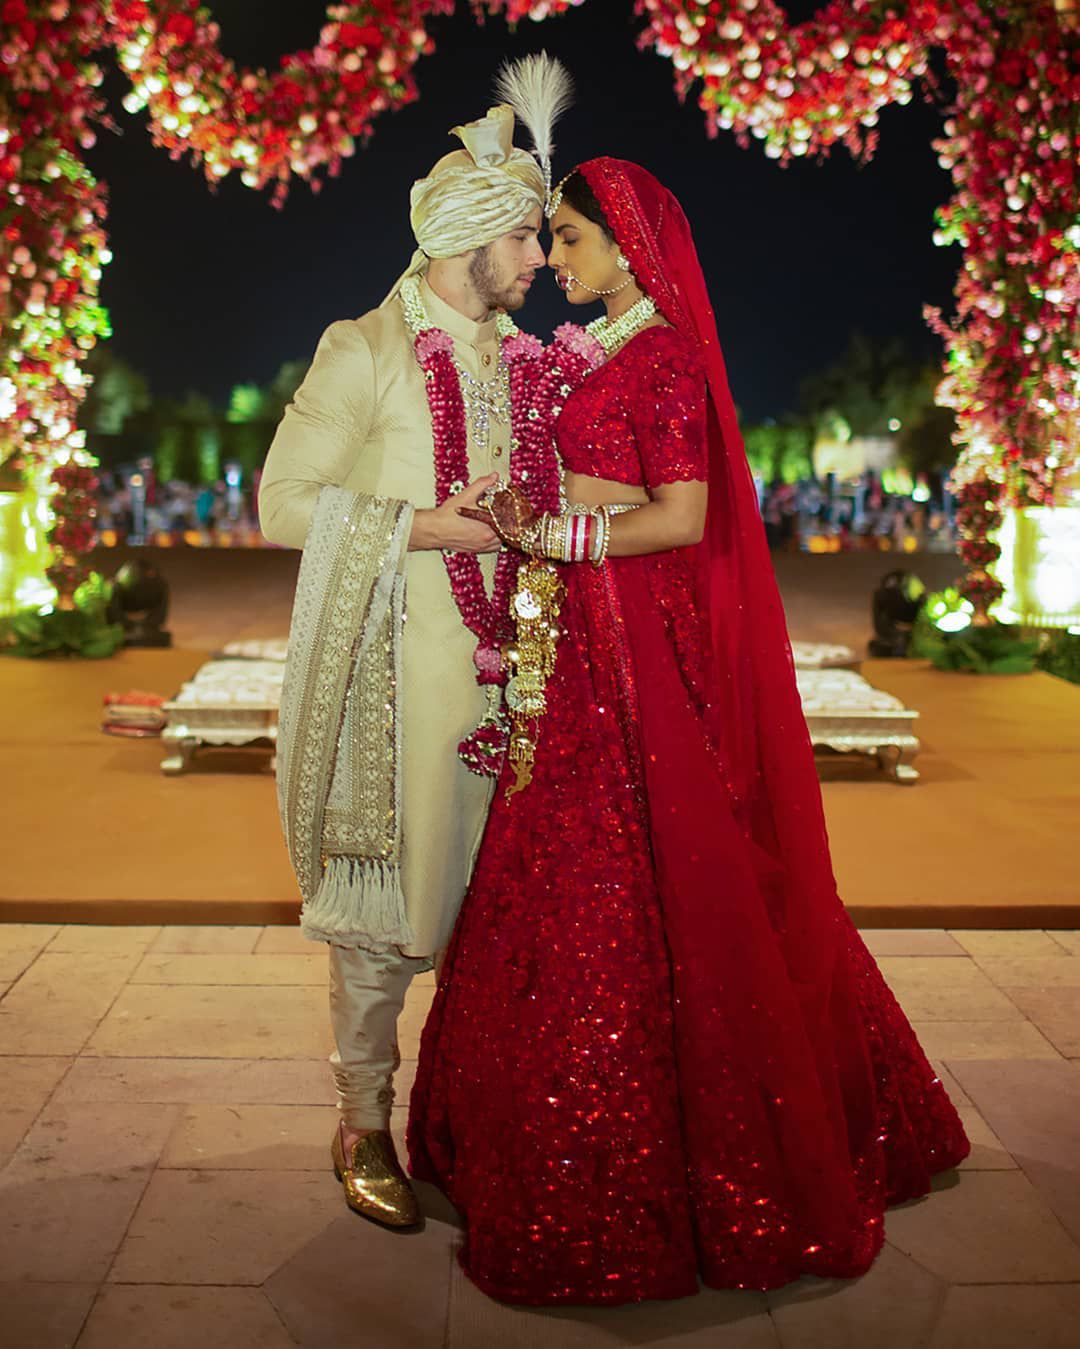 First pictures of Priyanka Chopra's wedding dress (and lehenga)